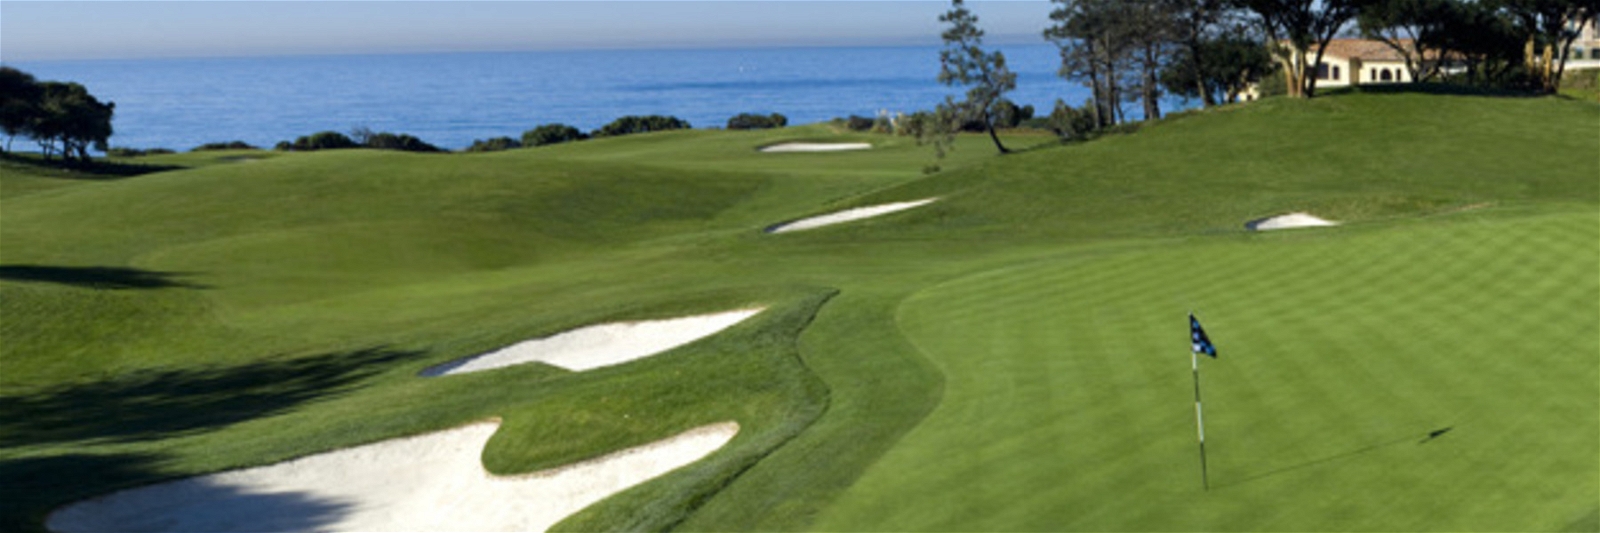 Golf Vacation Package - Monarch Beach Golf Club